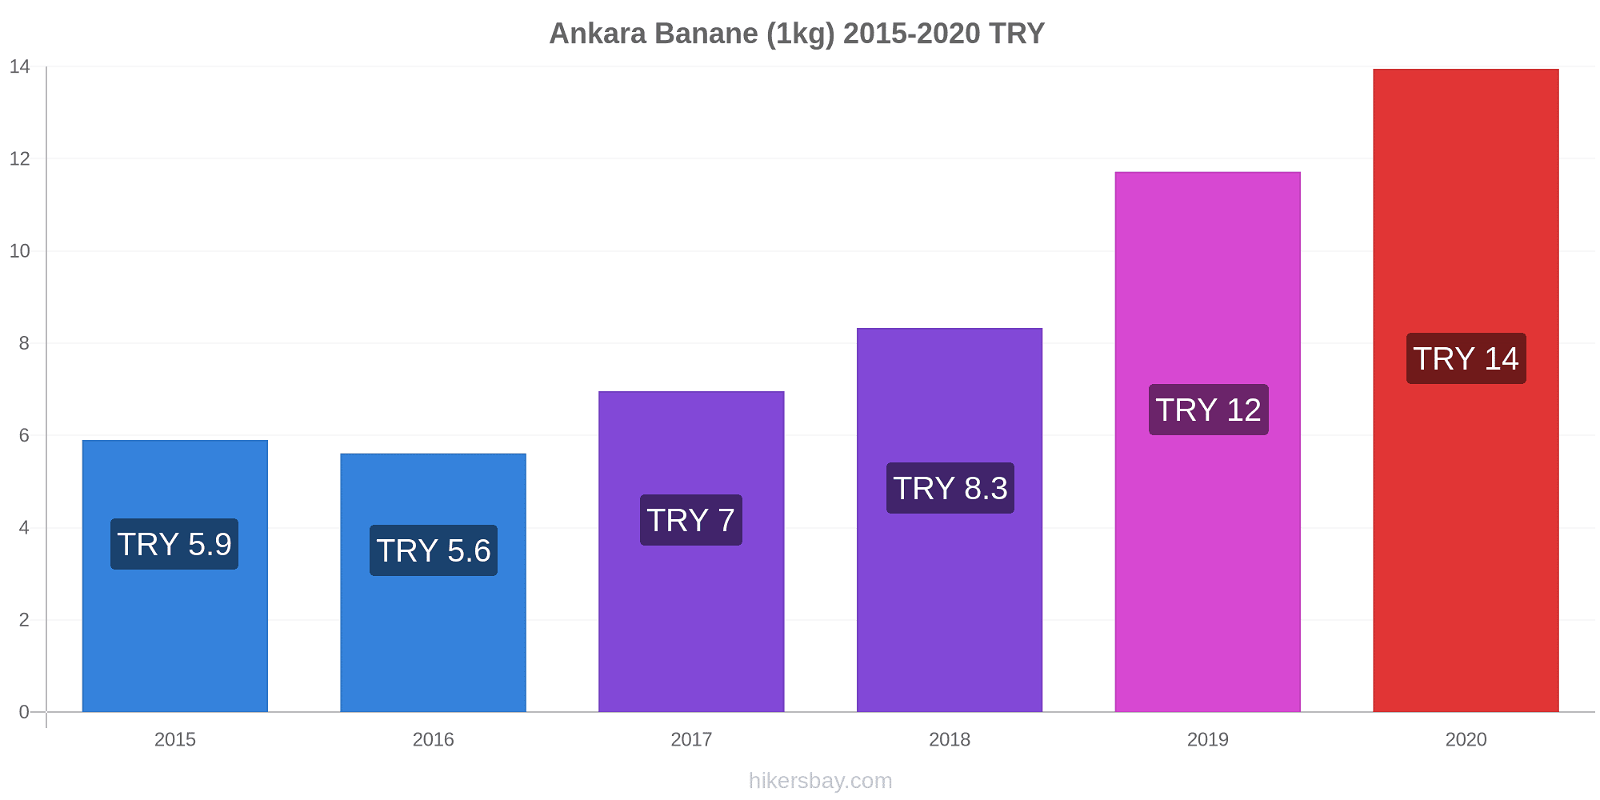 Ankara variazioni di prezzo Banana (1kg) hikersbay.com